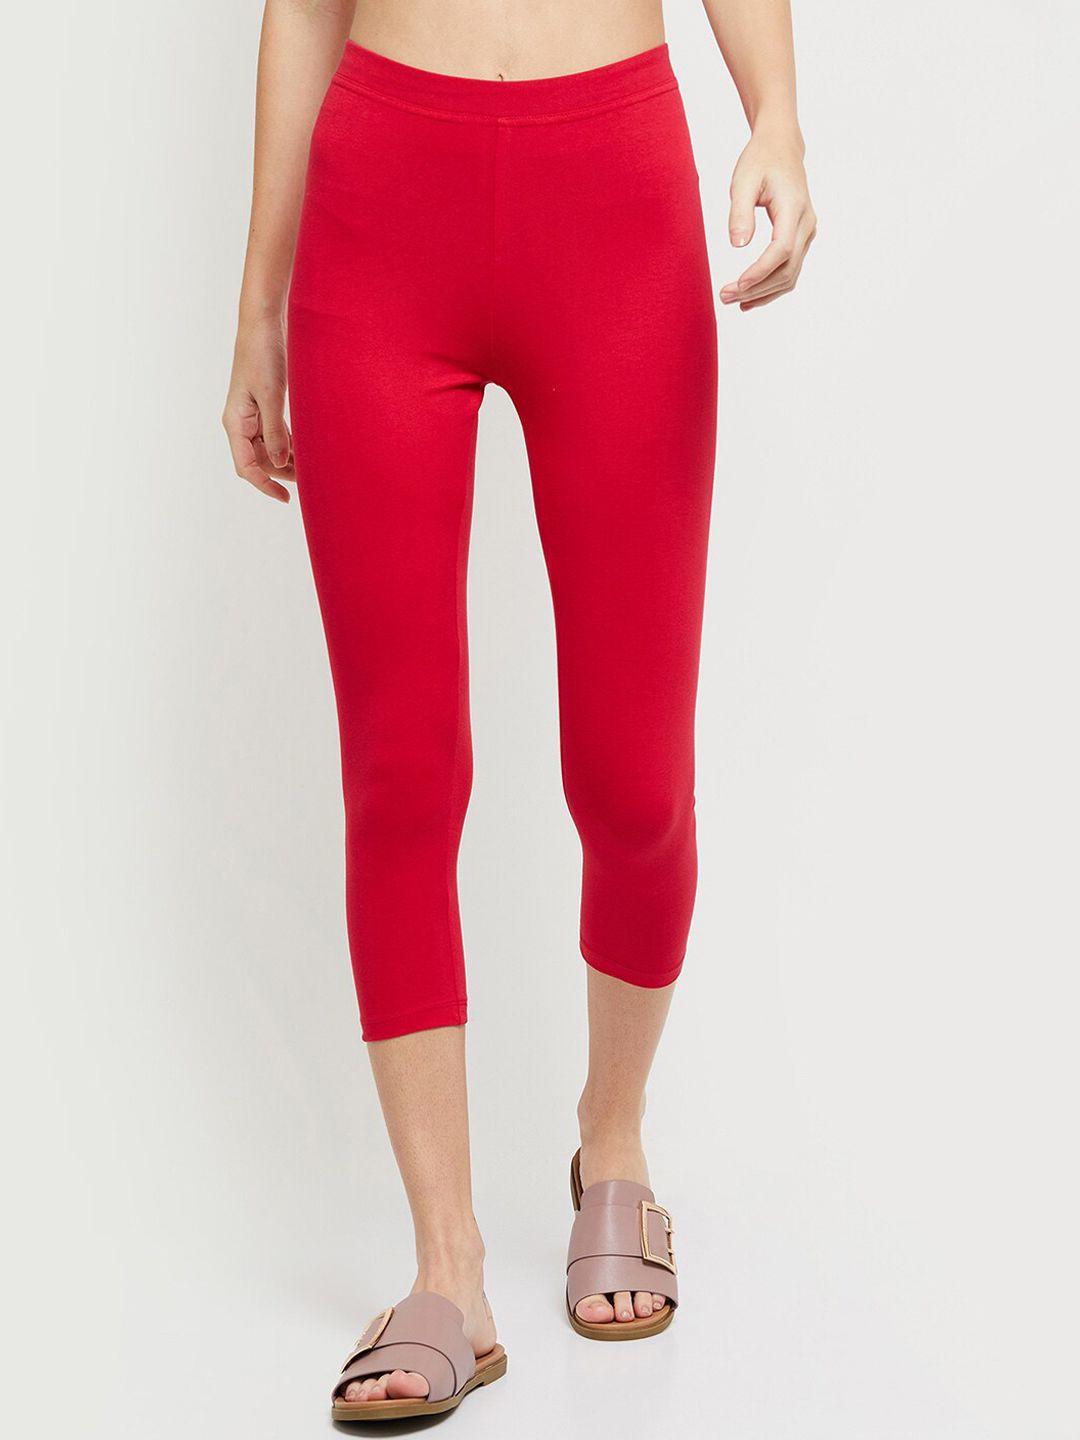 max women fuchsia red solid three-quarter length leggings